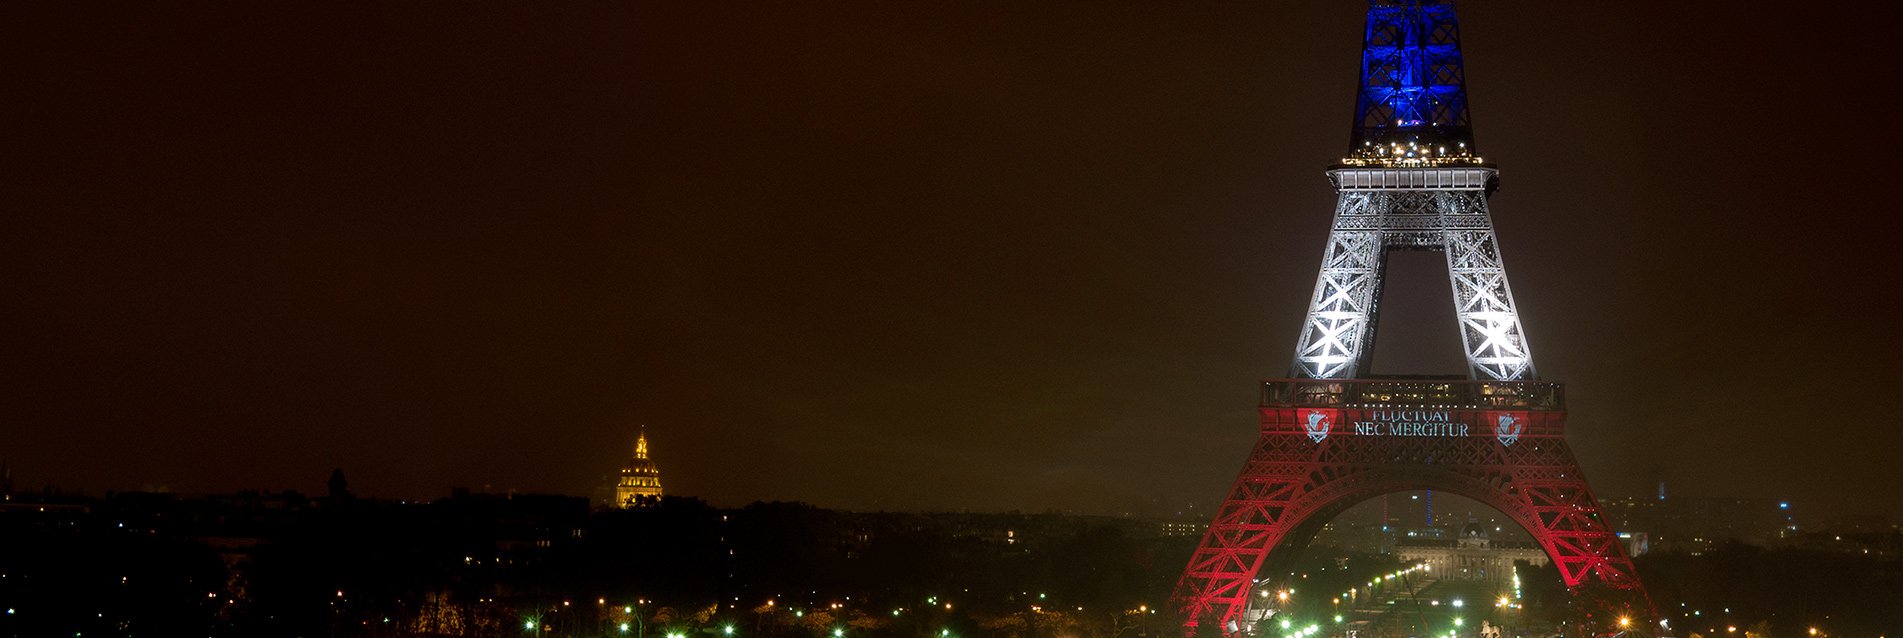 Attentats du 13 novembre à Paris